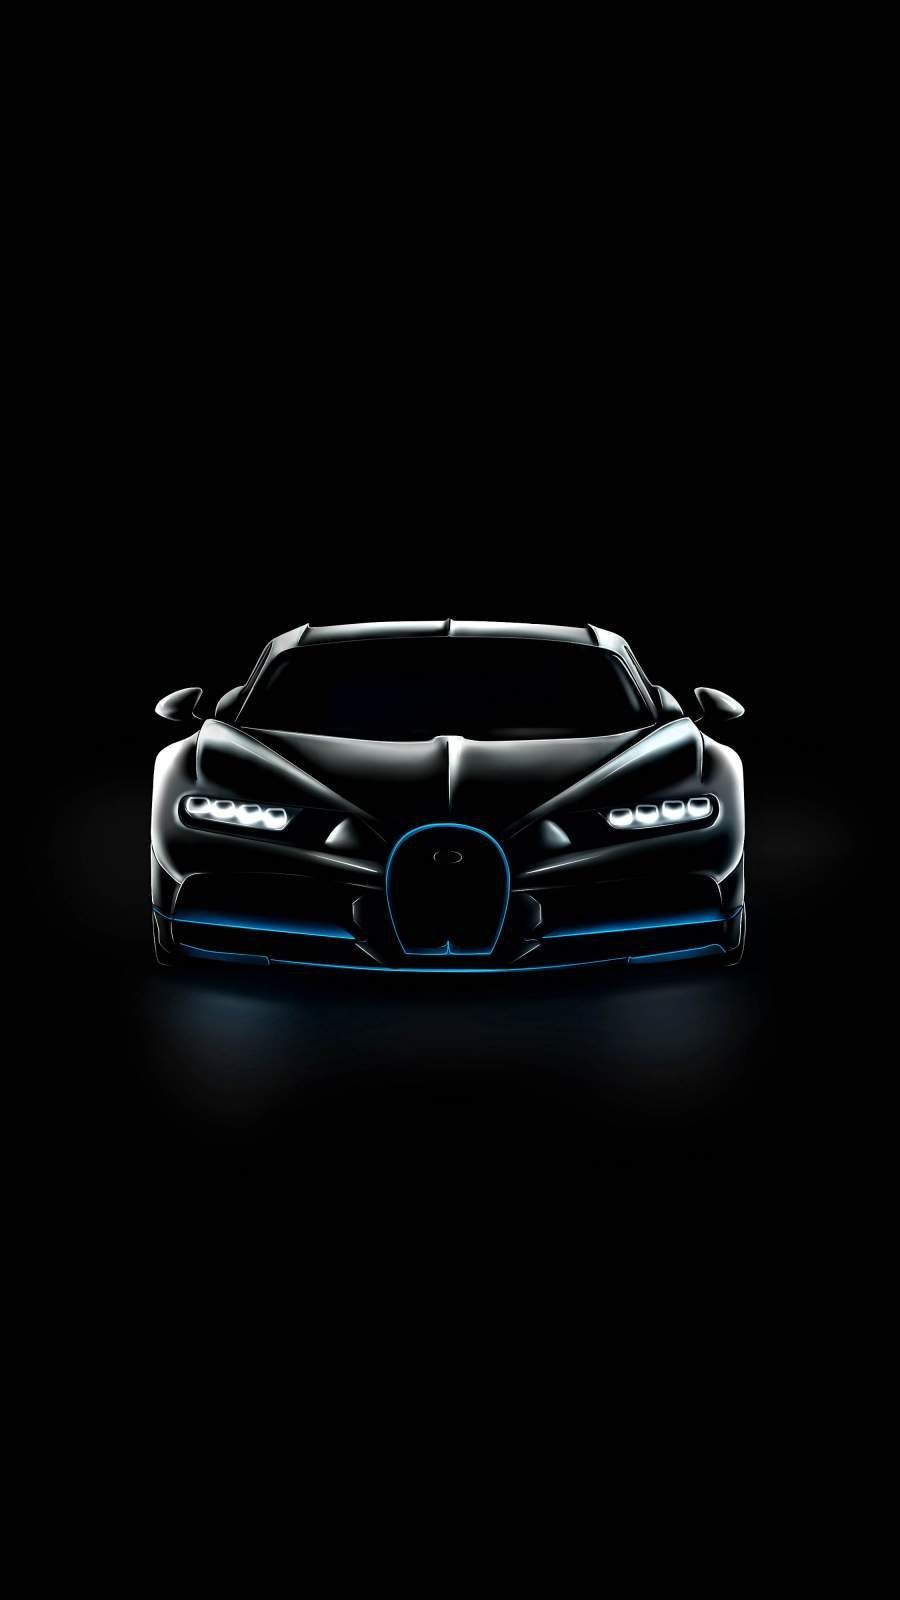 Bugatti Chiron Black iPhone Wallpaper. Bugatti chiron